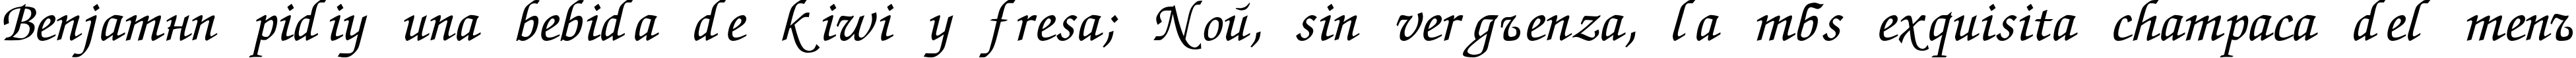 Пример написания шрифтом Zapf Chancery Italic:001.007 текста на испанском